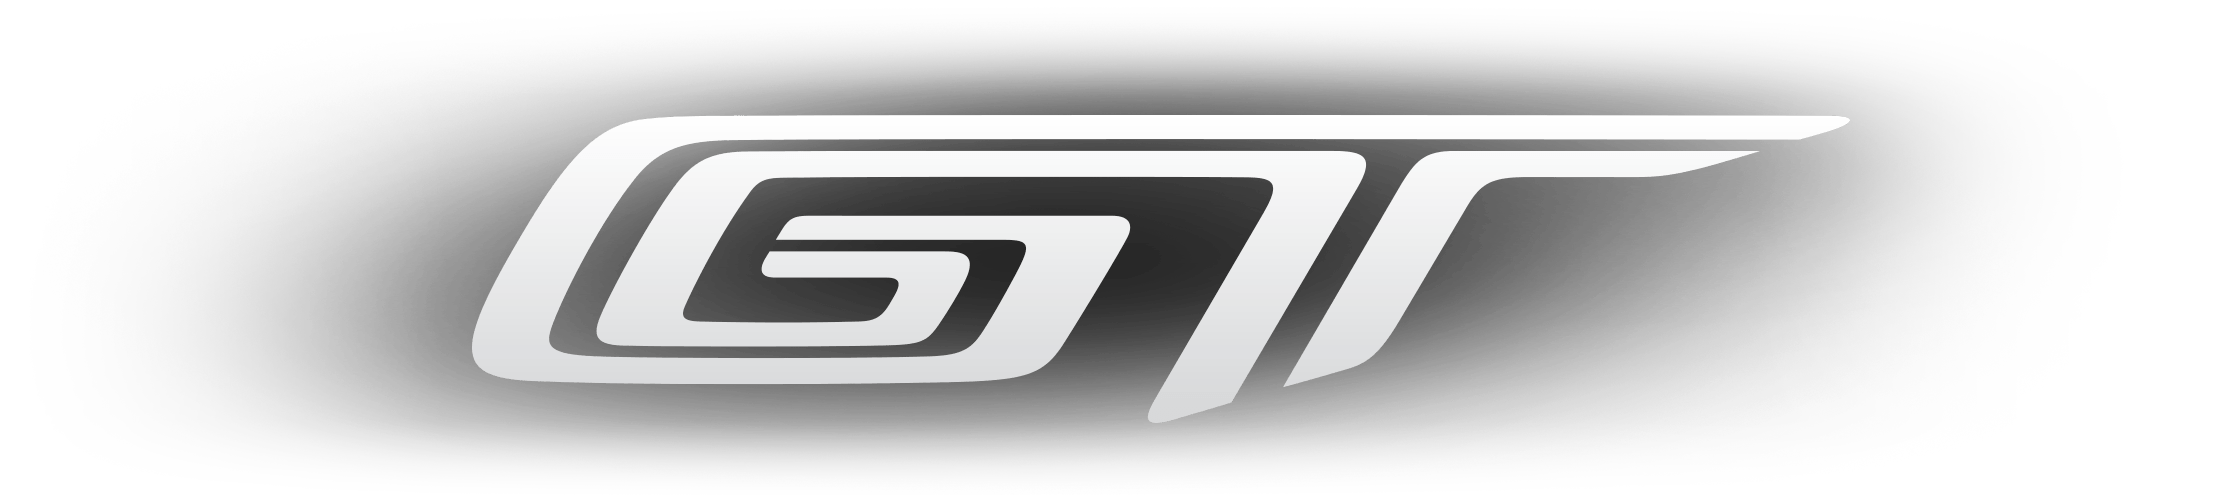 Ford GT Logo - Traxxas Ford GT | Ford Replica RC Car